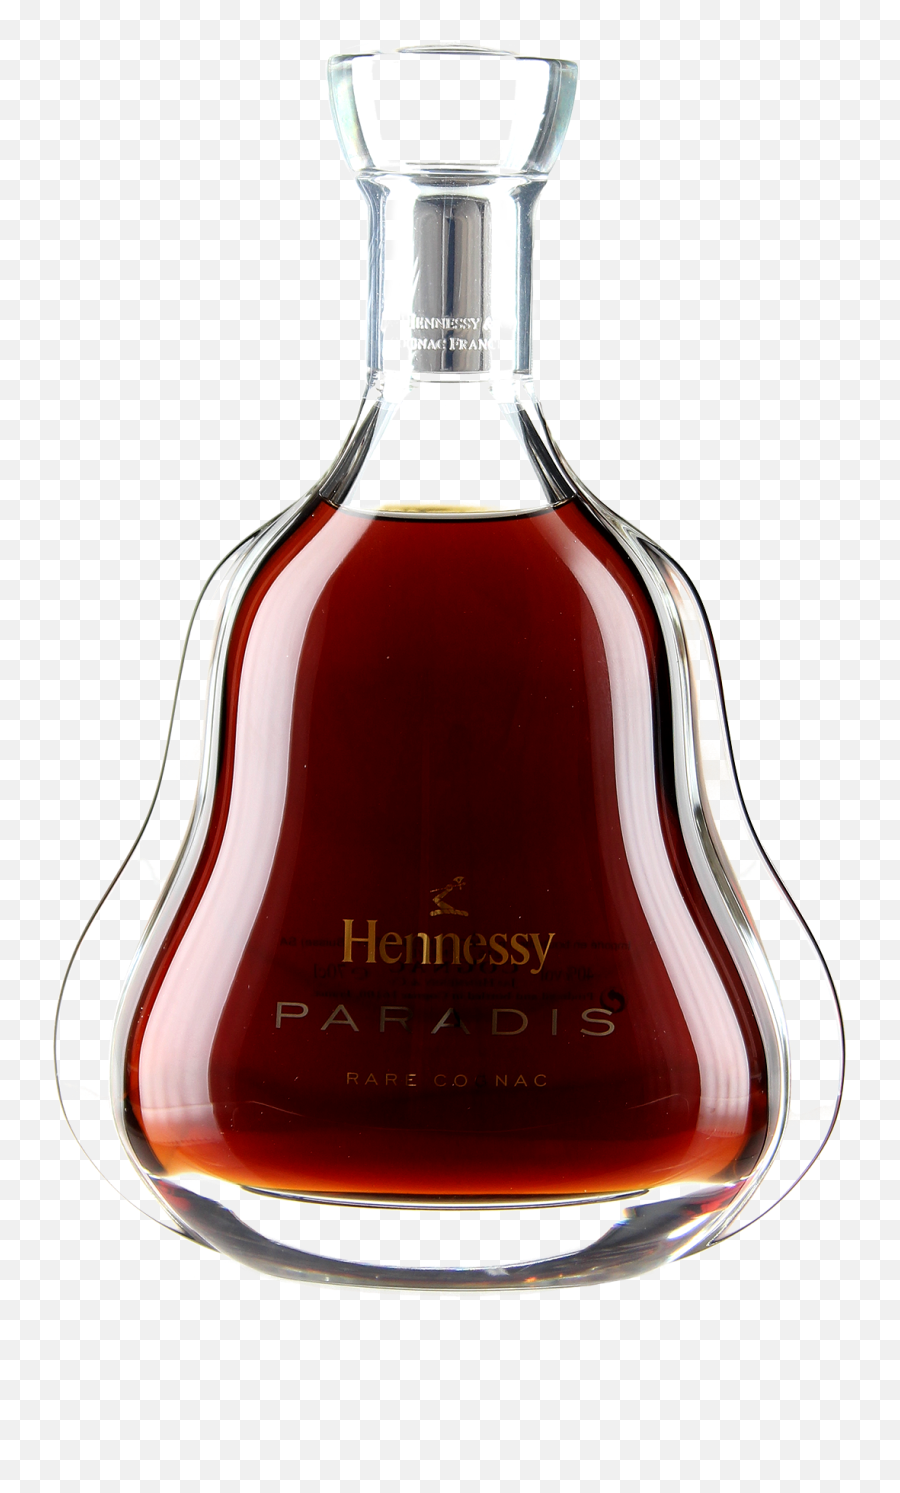 Cognac Paradis - Glass Bottle Png,Hennessy Bottle Png